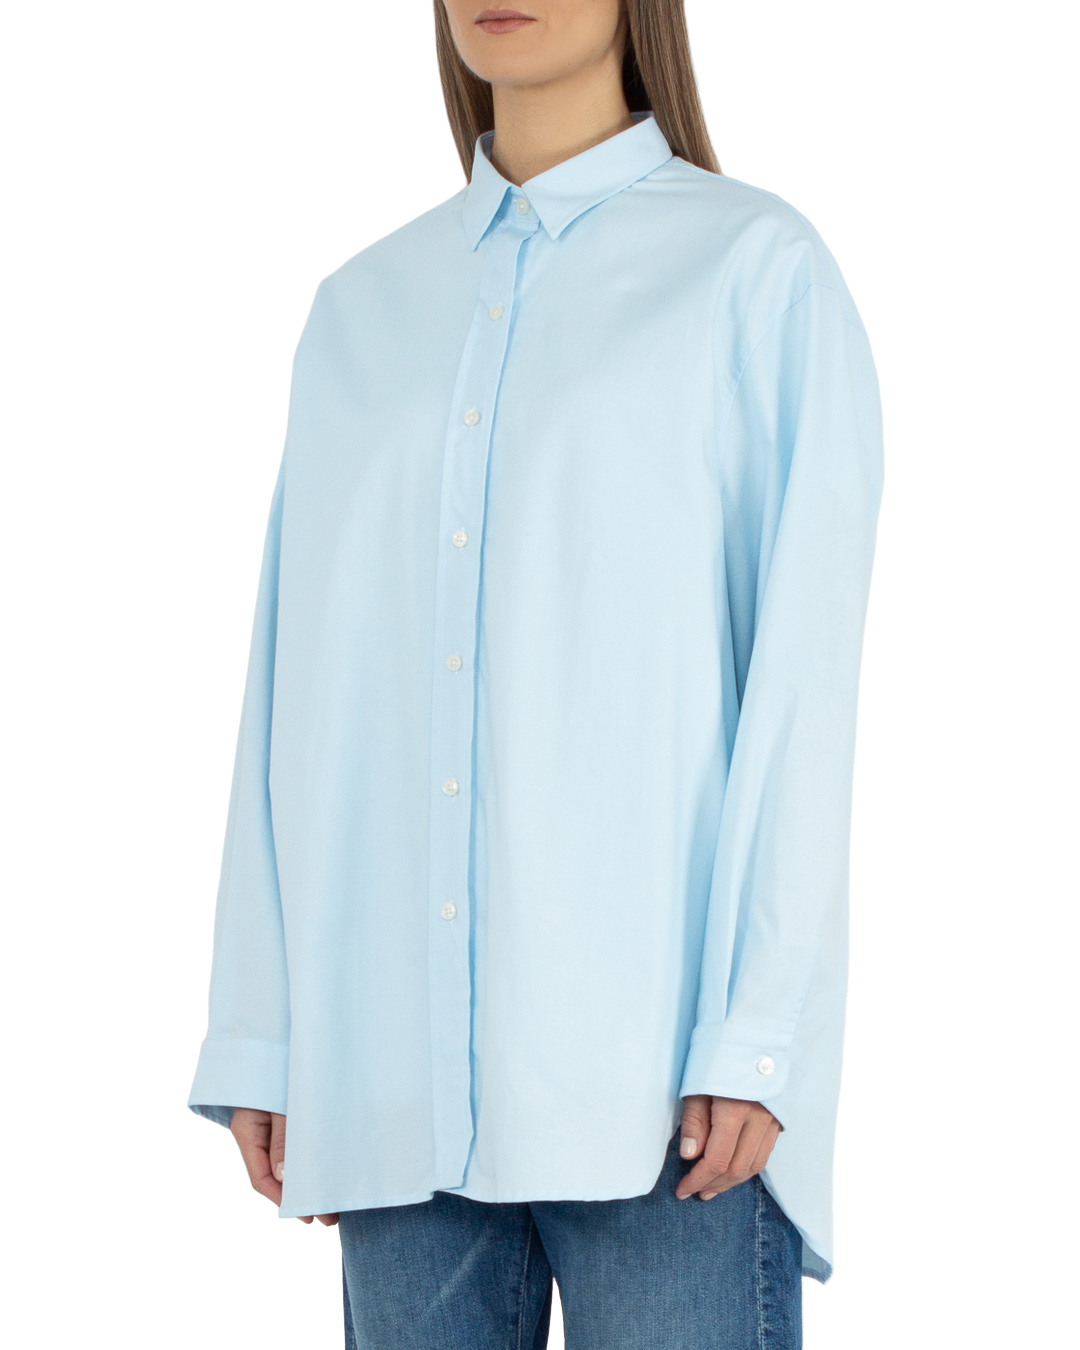 хлопковая рубашка ANTELOPE THE LABEL A1.BABY BLUE голубой UNI, размер UNI - фото 3